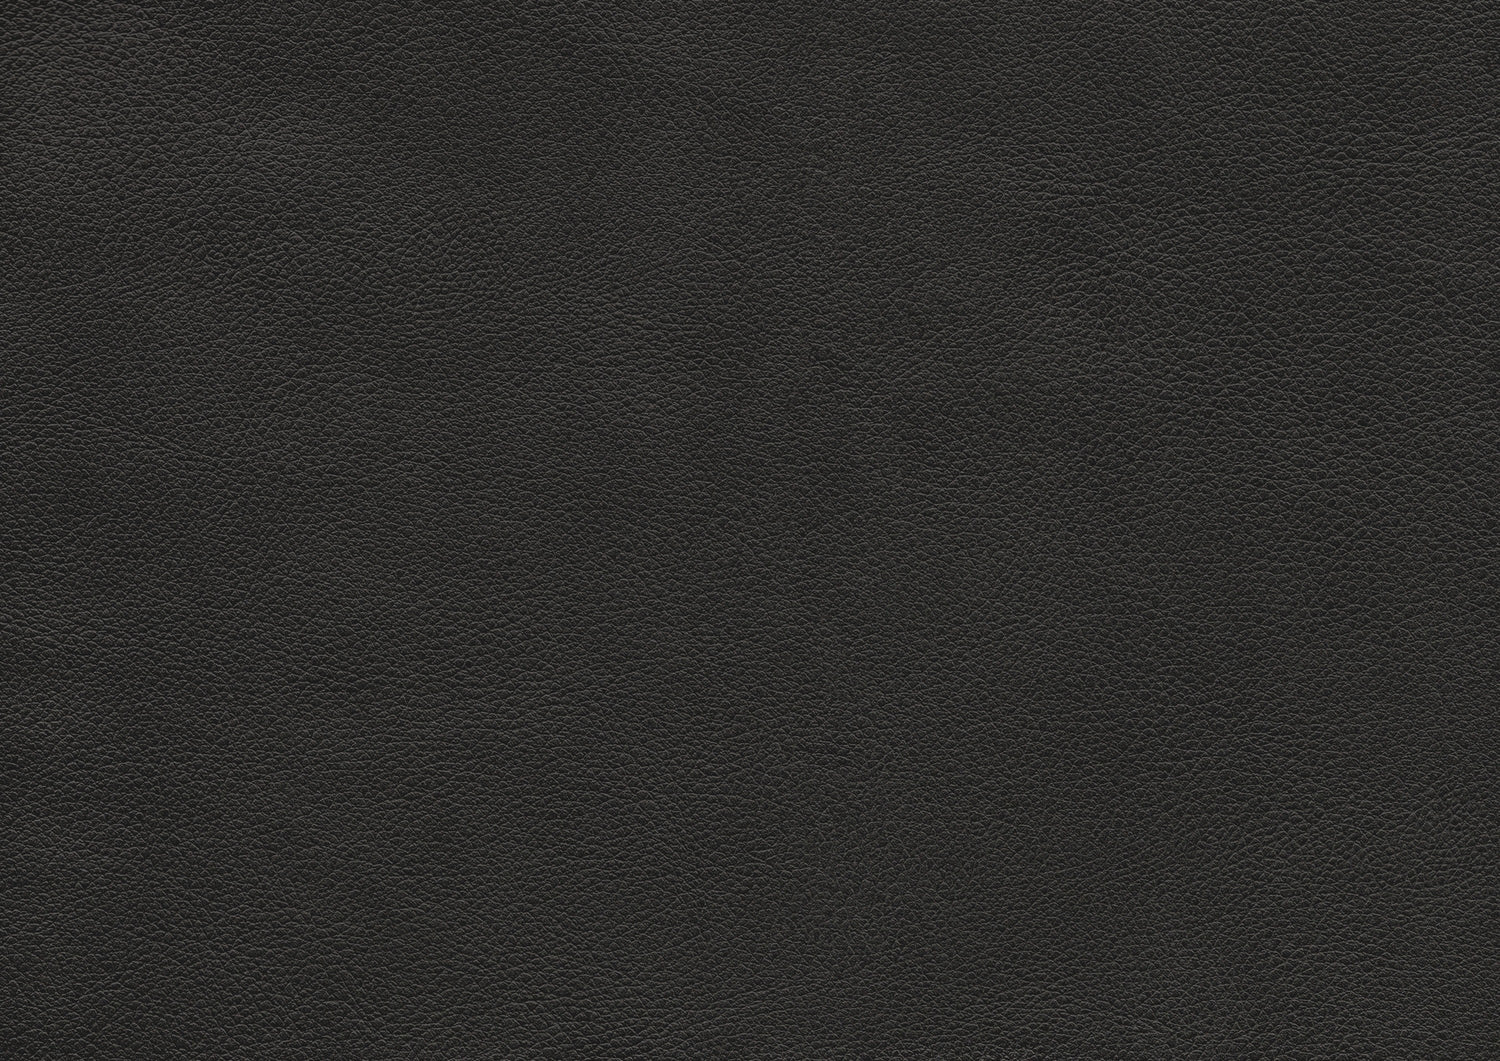 Spivey Dark Gray Leather Sofa - 9460DG-3 - Bien Home Furniture &amp; Electronics